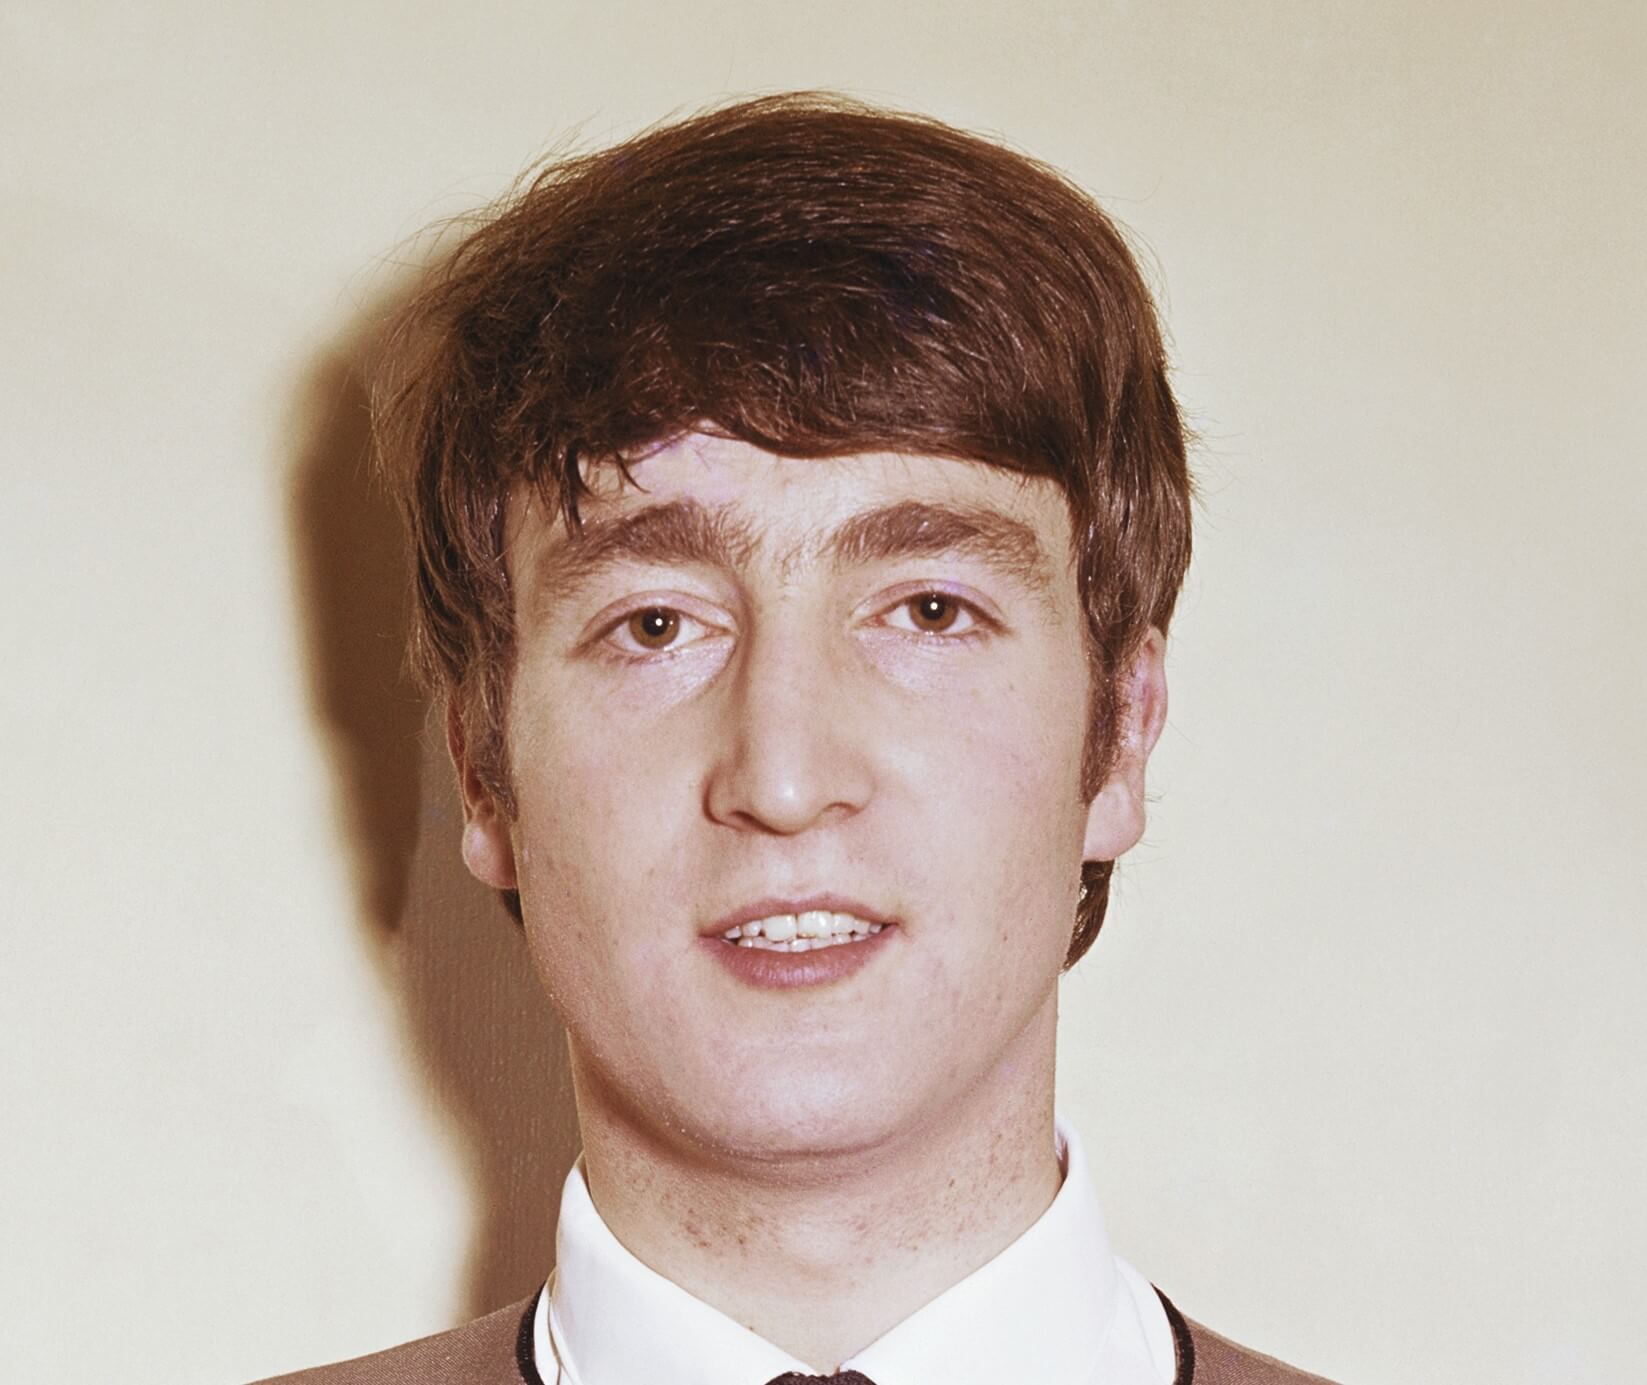 The Beatles' John Lennon wearing a collar